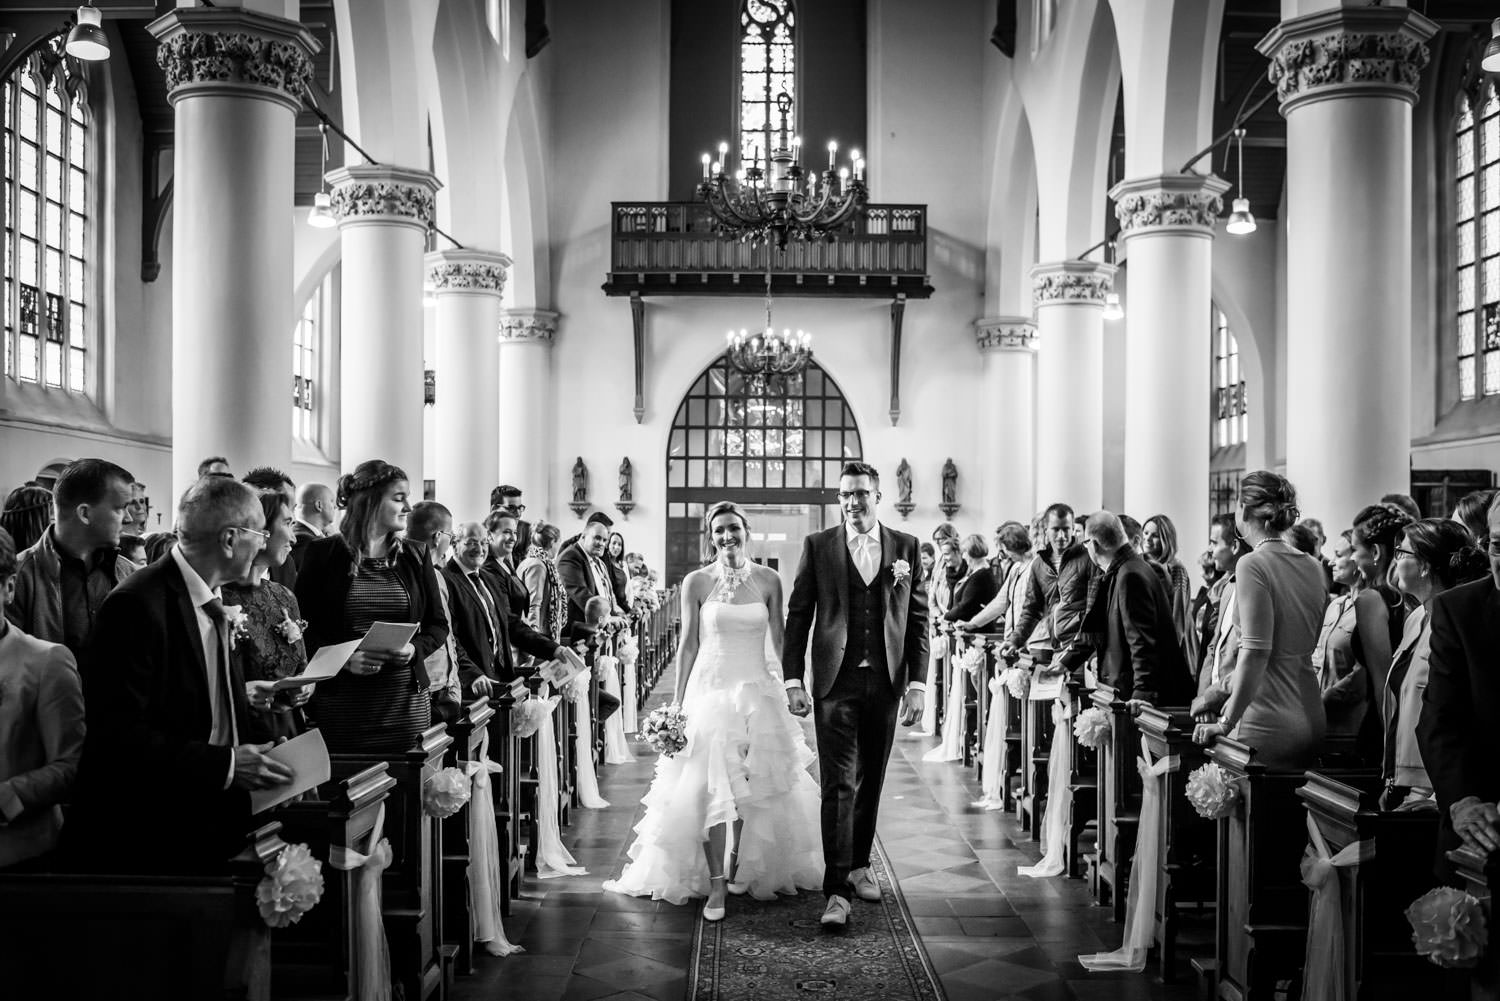 Binnenkomst van het bruidspaar in de kerk van Princenhage